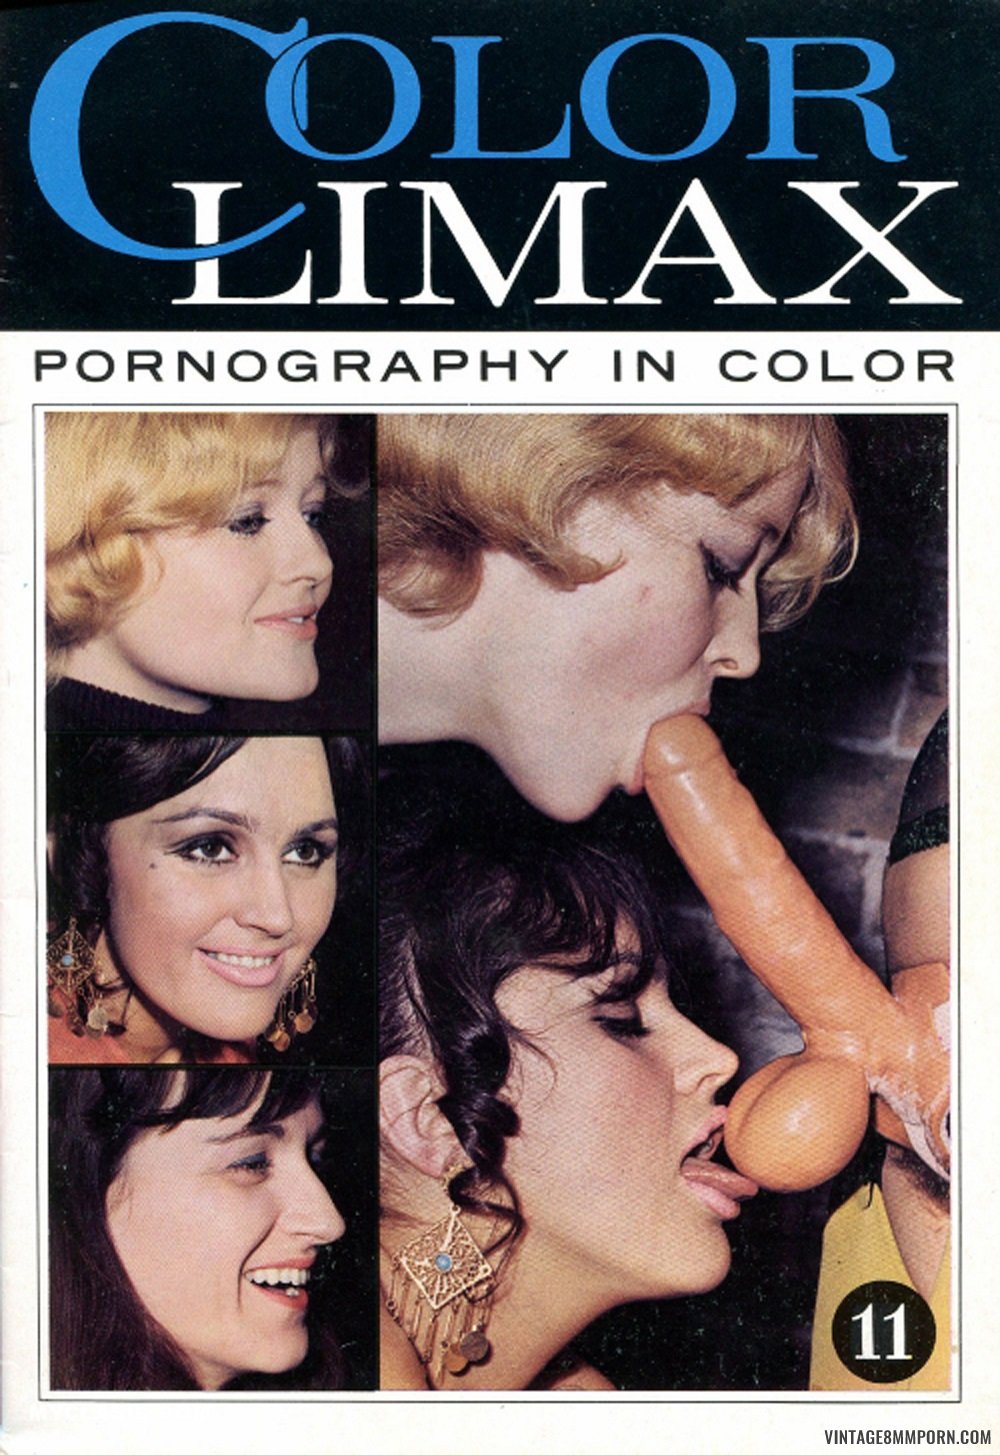 Color climax vintage porn